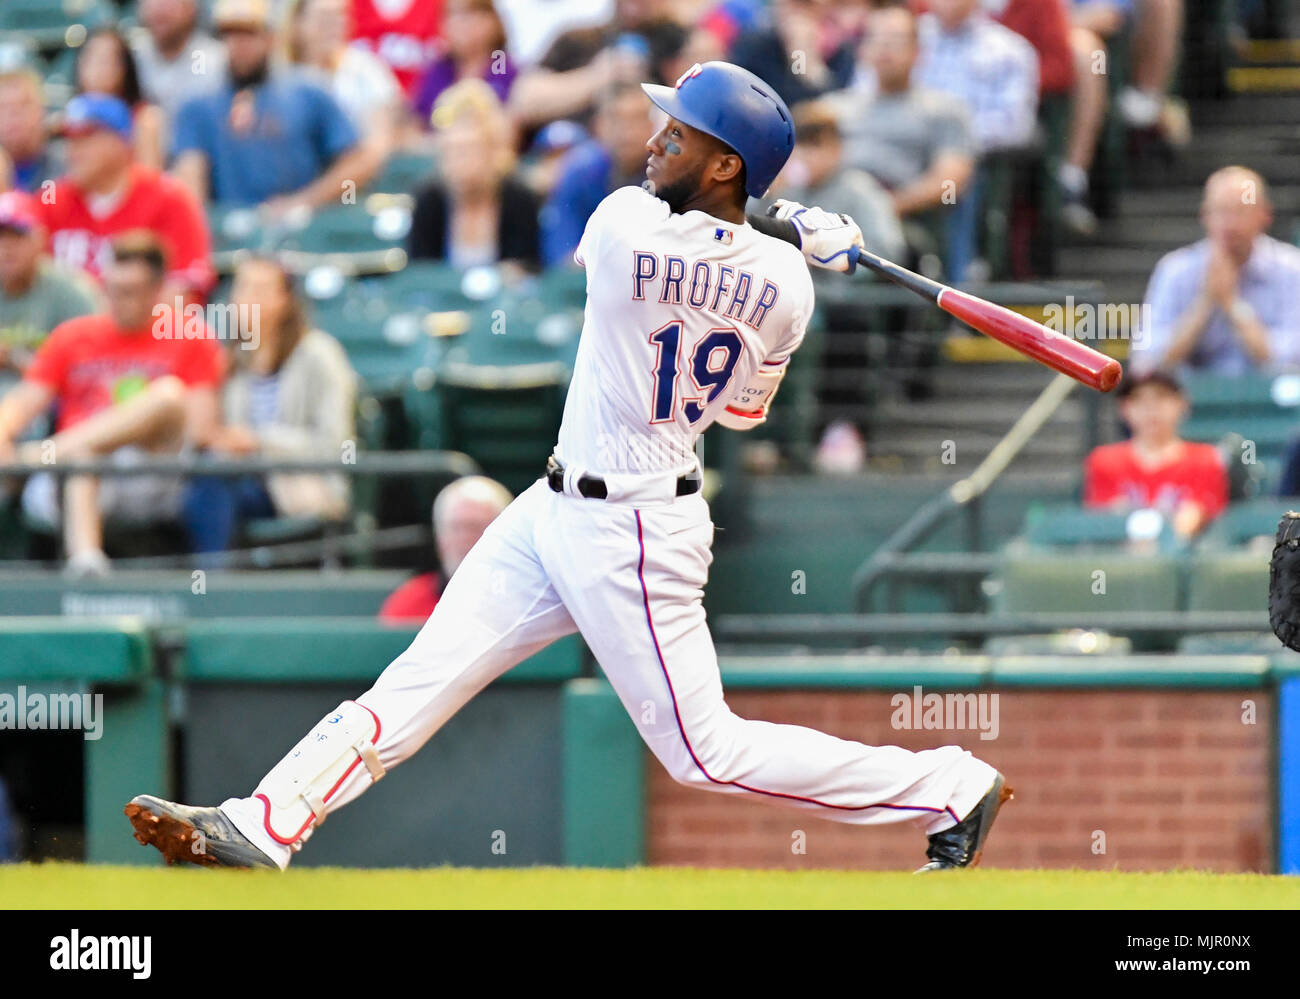 May 04, 2018: Texas Rangers shortstop Jurickson Profar #19 at bat